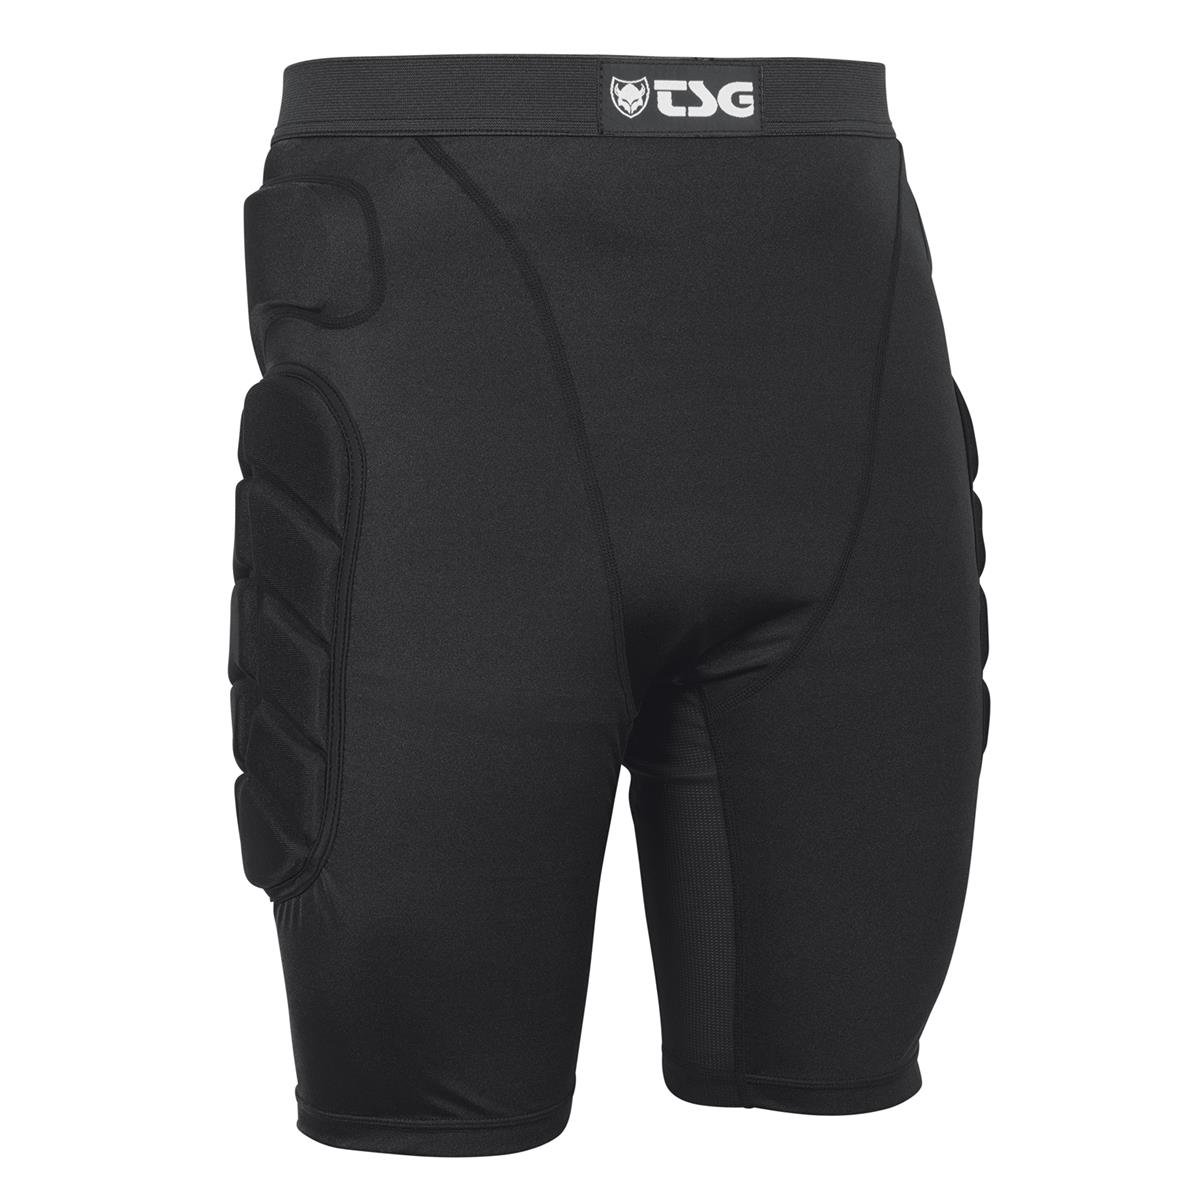 TSG Sous-Shorts de Protection Crash All Terrain Noir